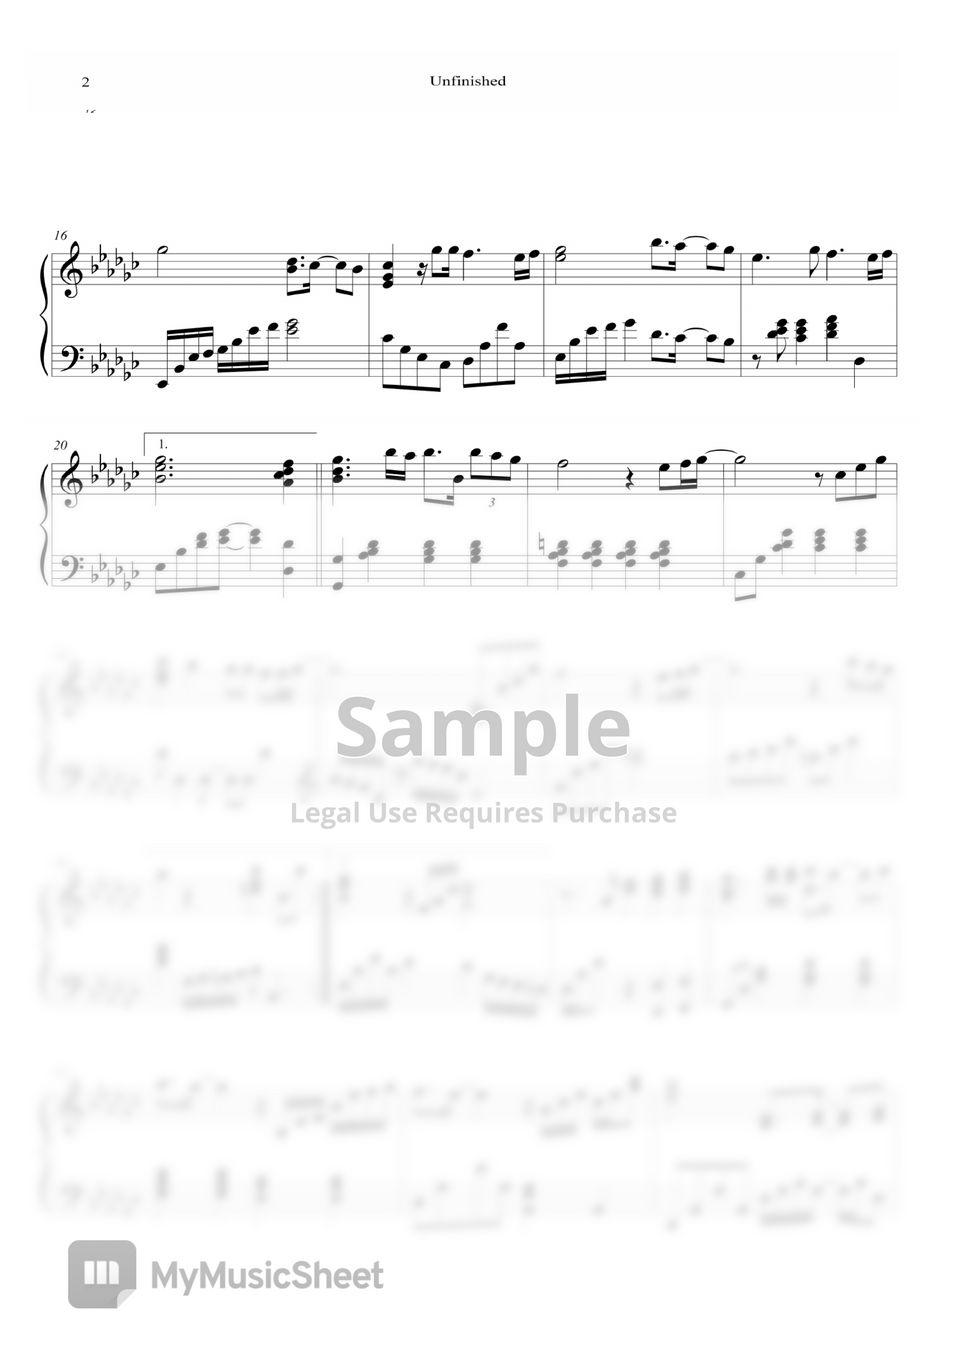 X Japan - Unfinished (Piano /Original Key) Sheets by New Sheet